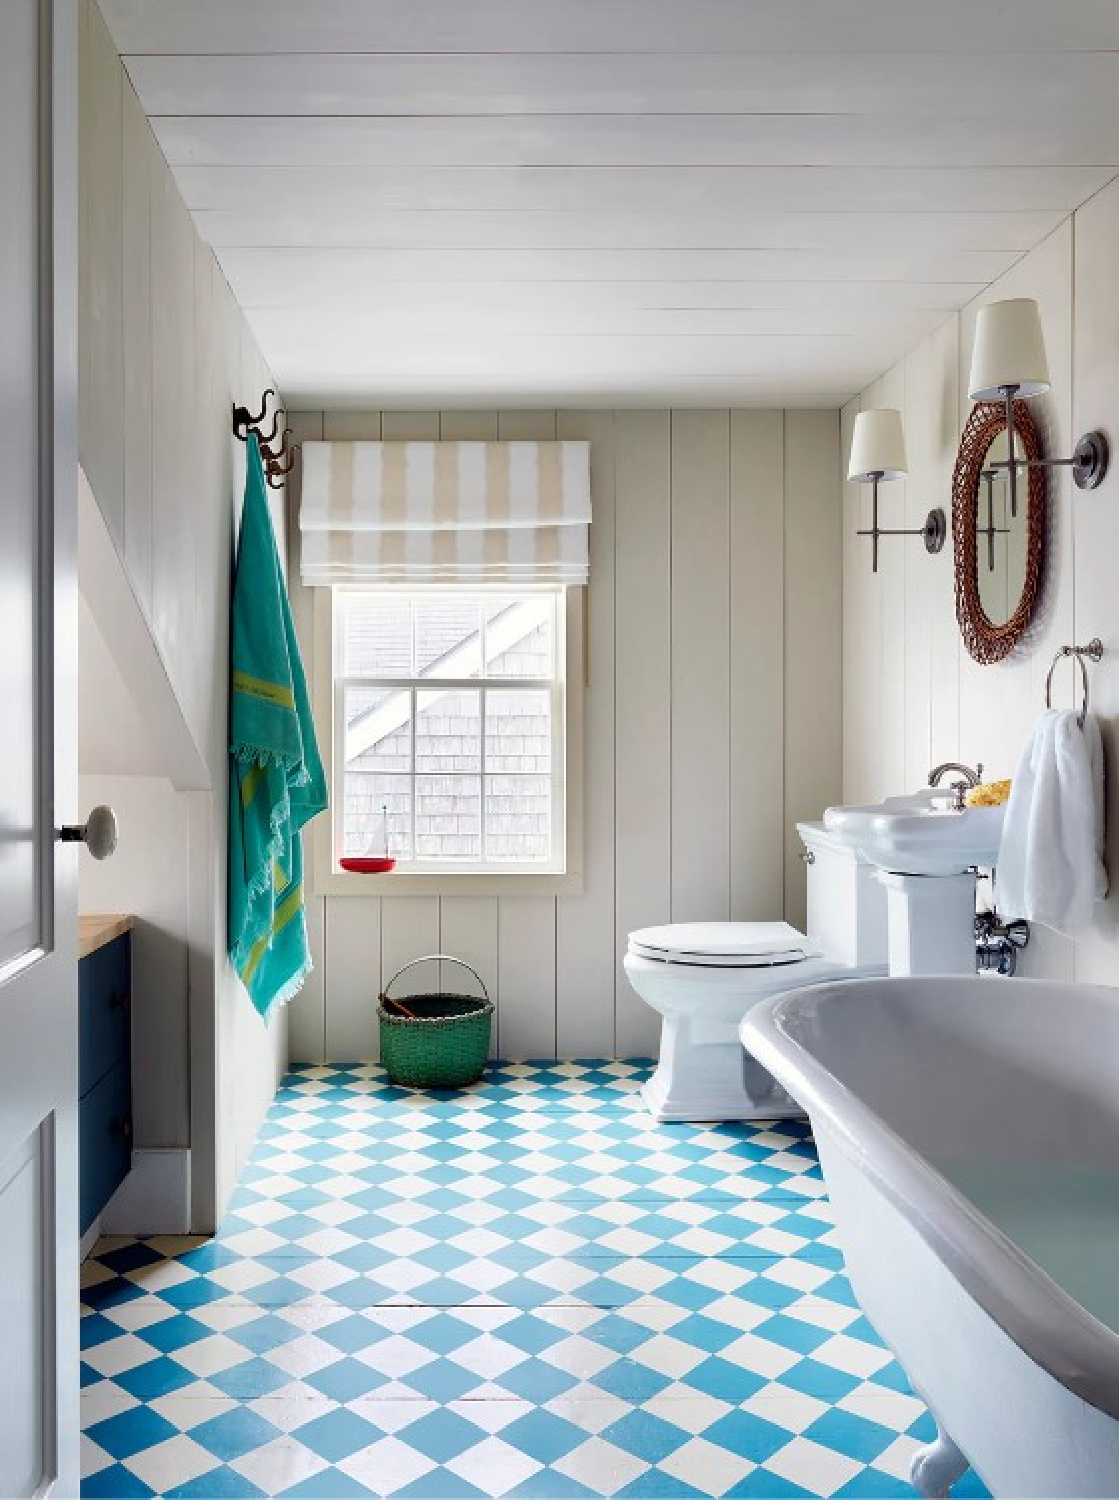 Beautiful bathroom - Simon Brown photo and Beata Human interior design. #beataheuman #swedishfarmhouse